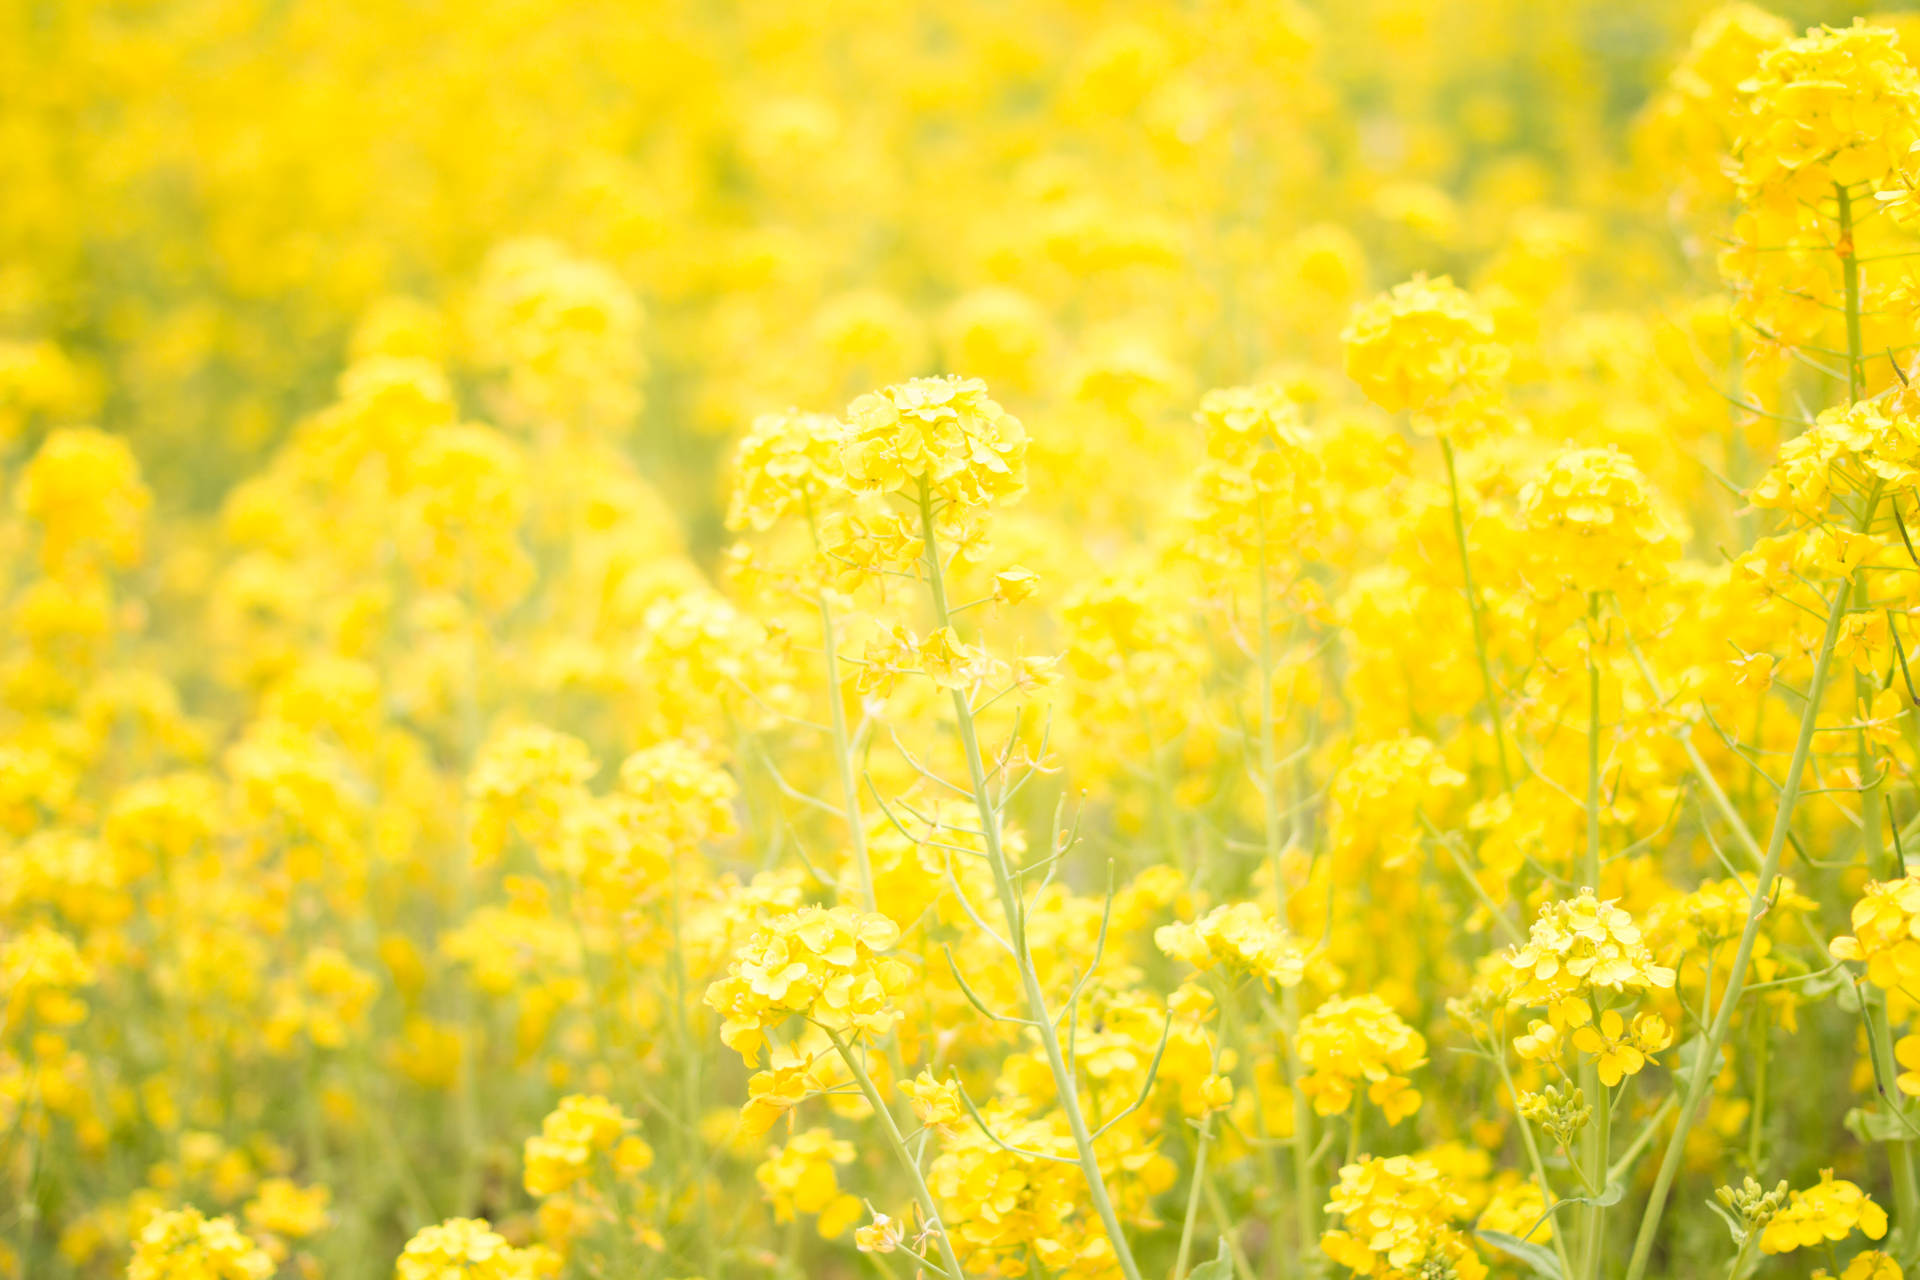 Dreamy Yellow Flower Field Background